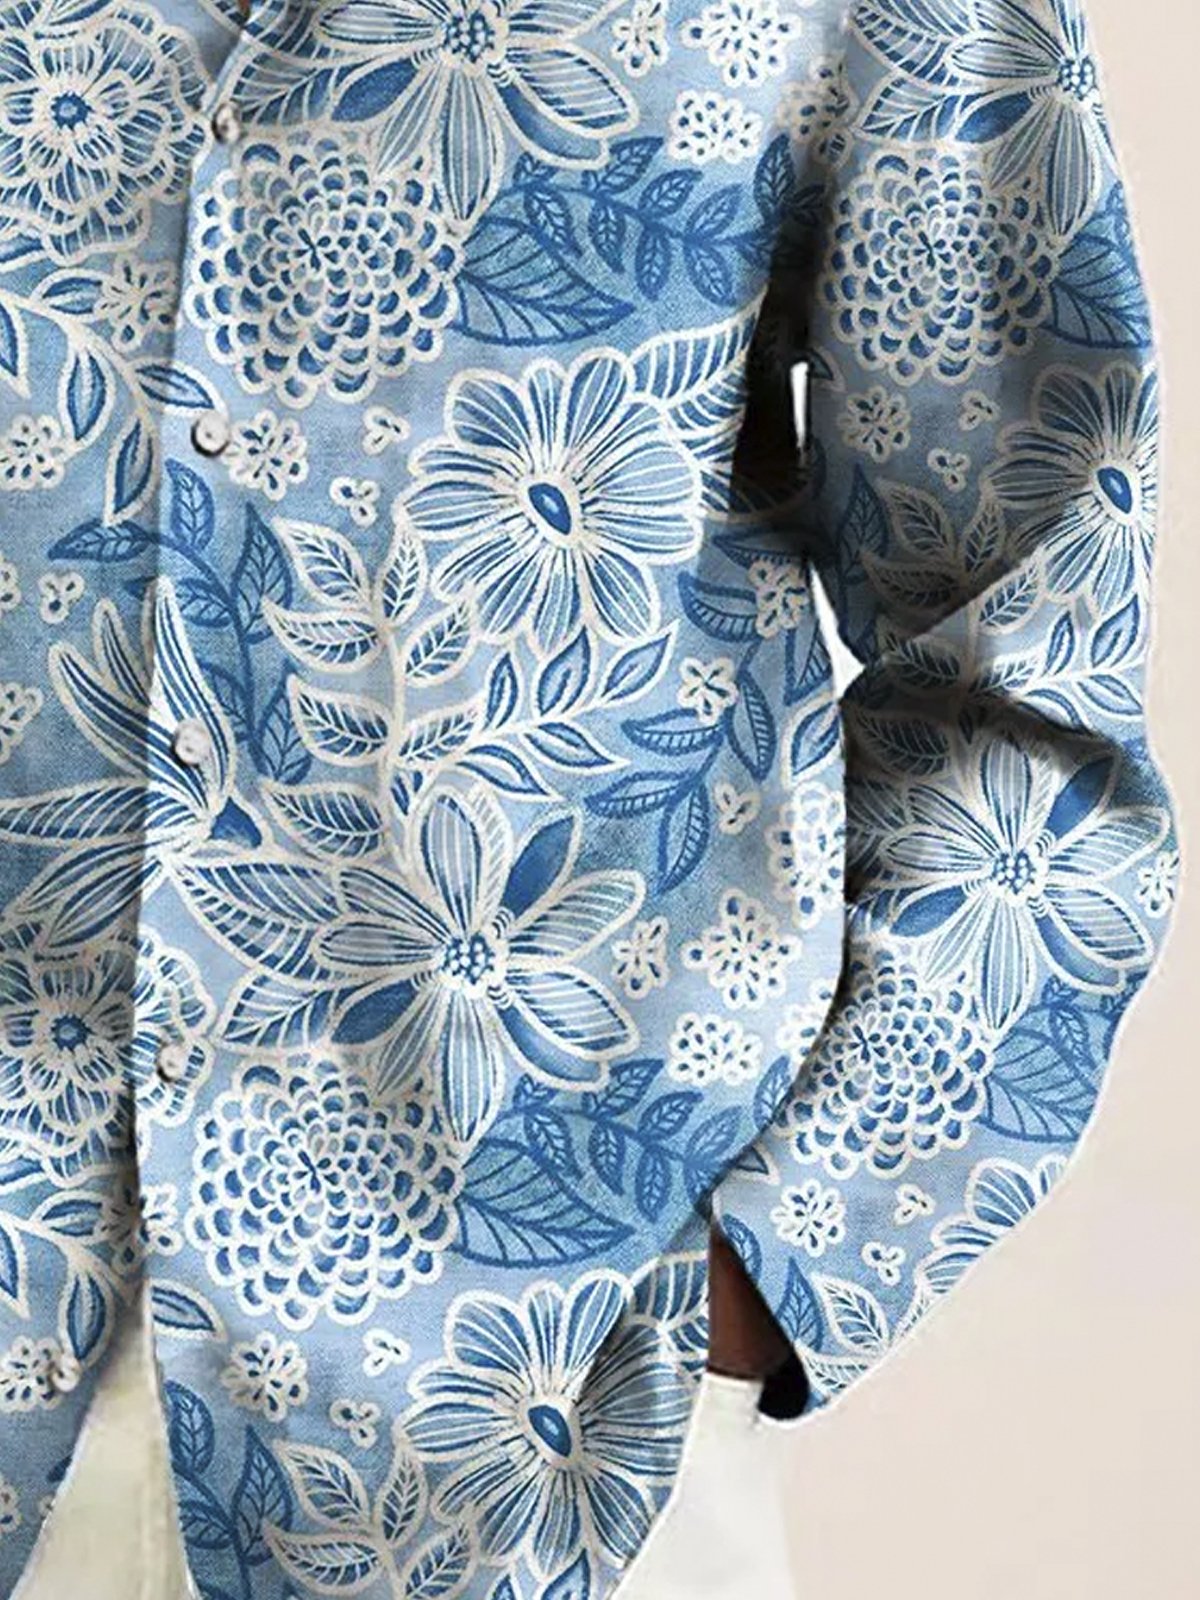 Royaura® Beach Holiday Light Blue Men's Hawaiian Shirt Floral Art Pocket Camp Shirt Big Tall